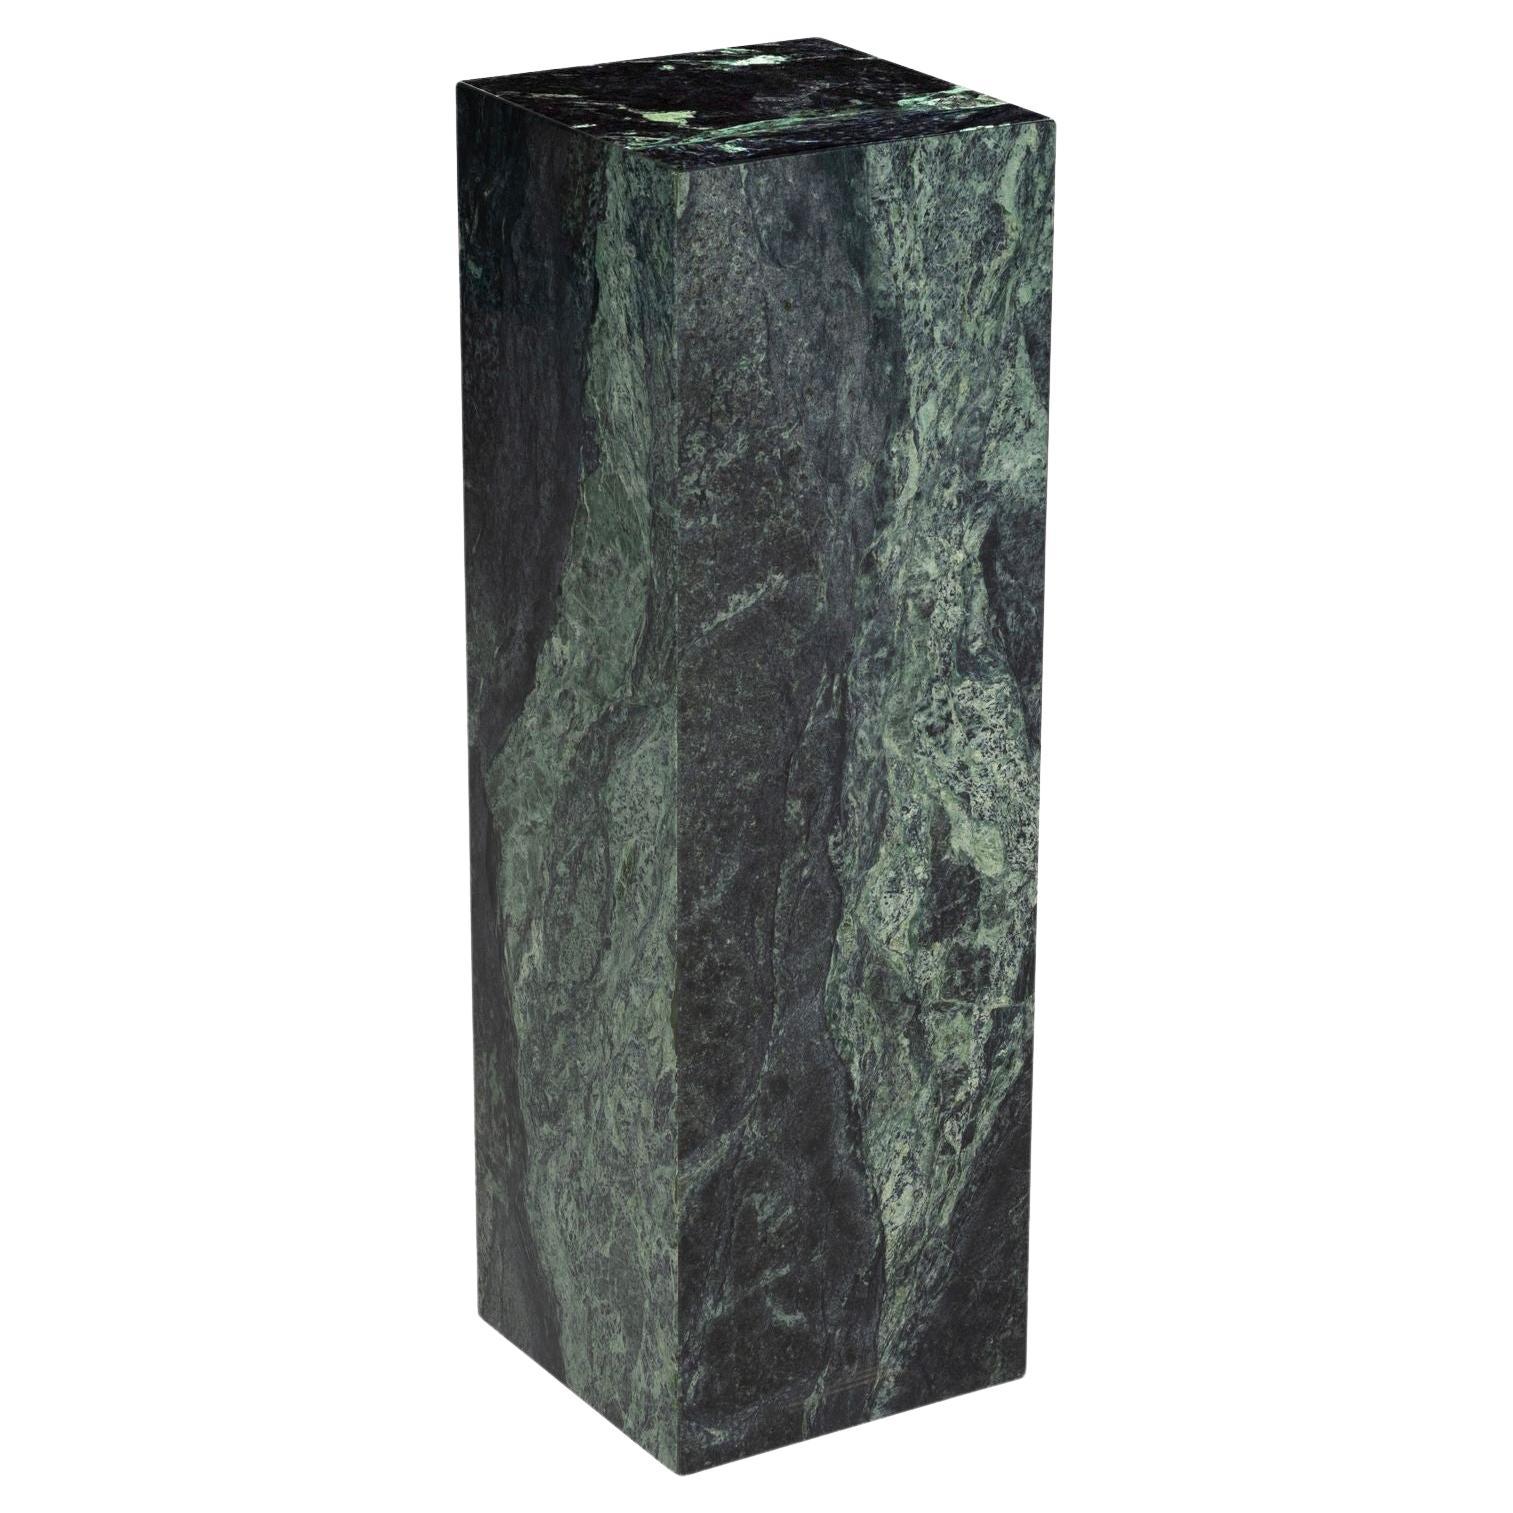 Verdi Alpi Marble Pedestal Mangiarotti Style For Sale